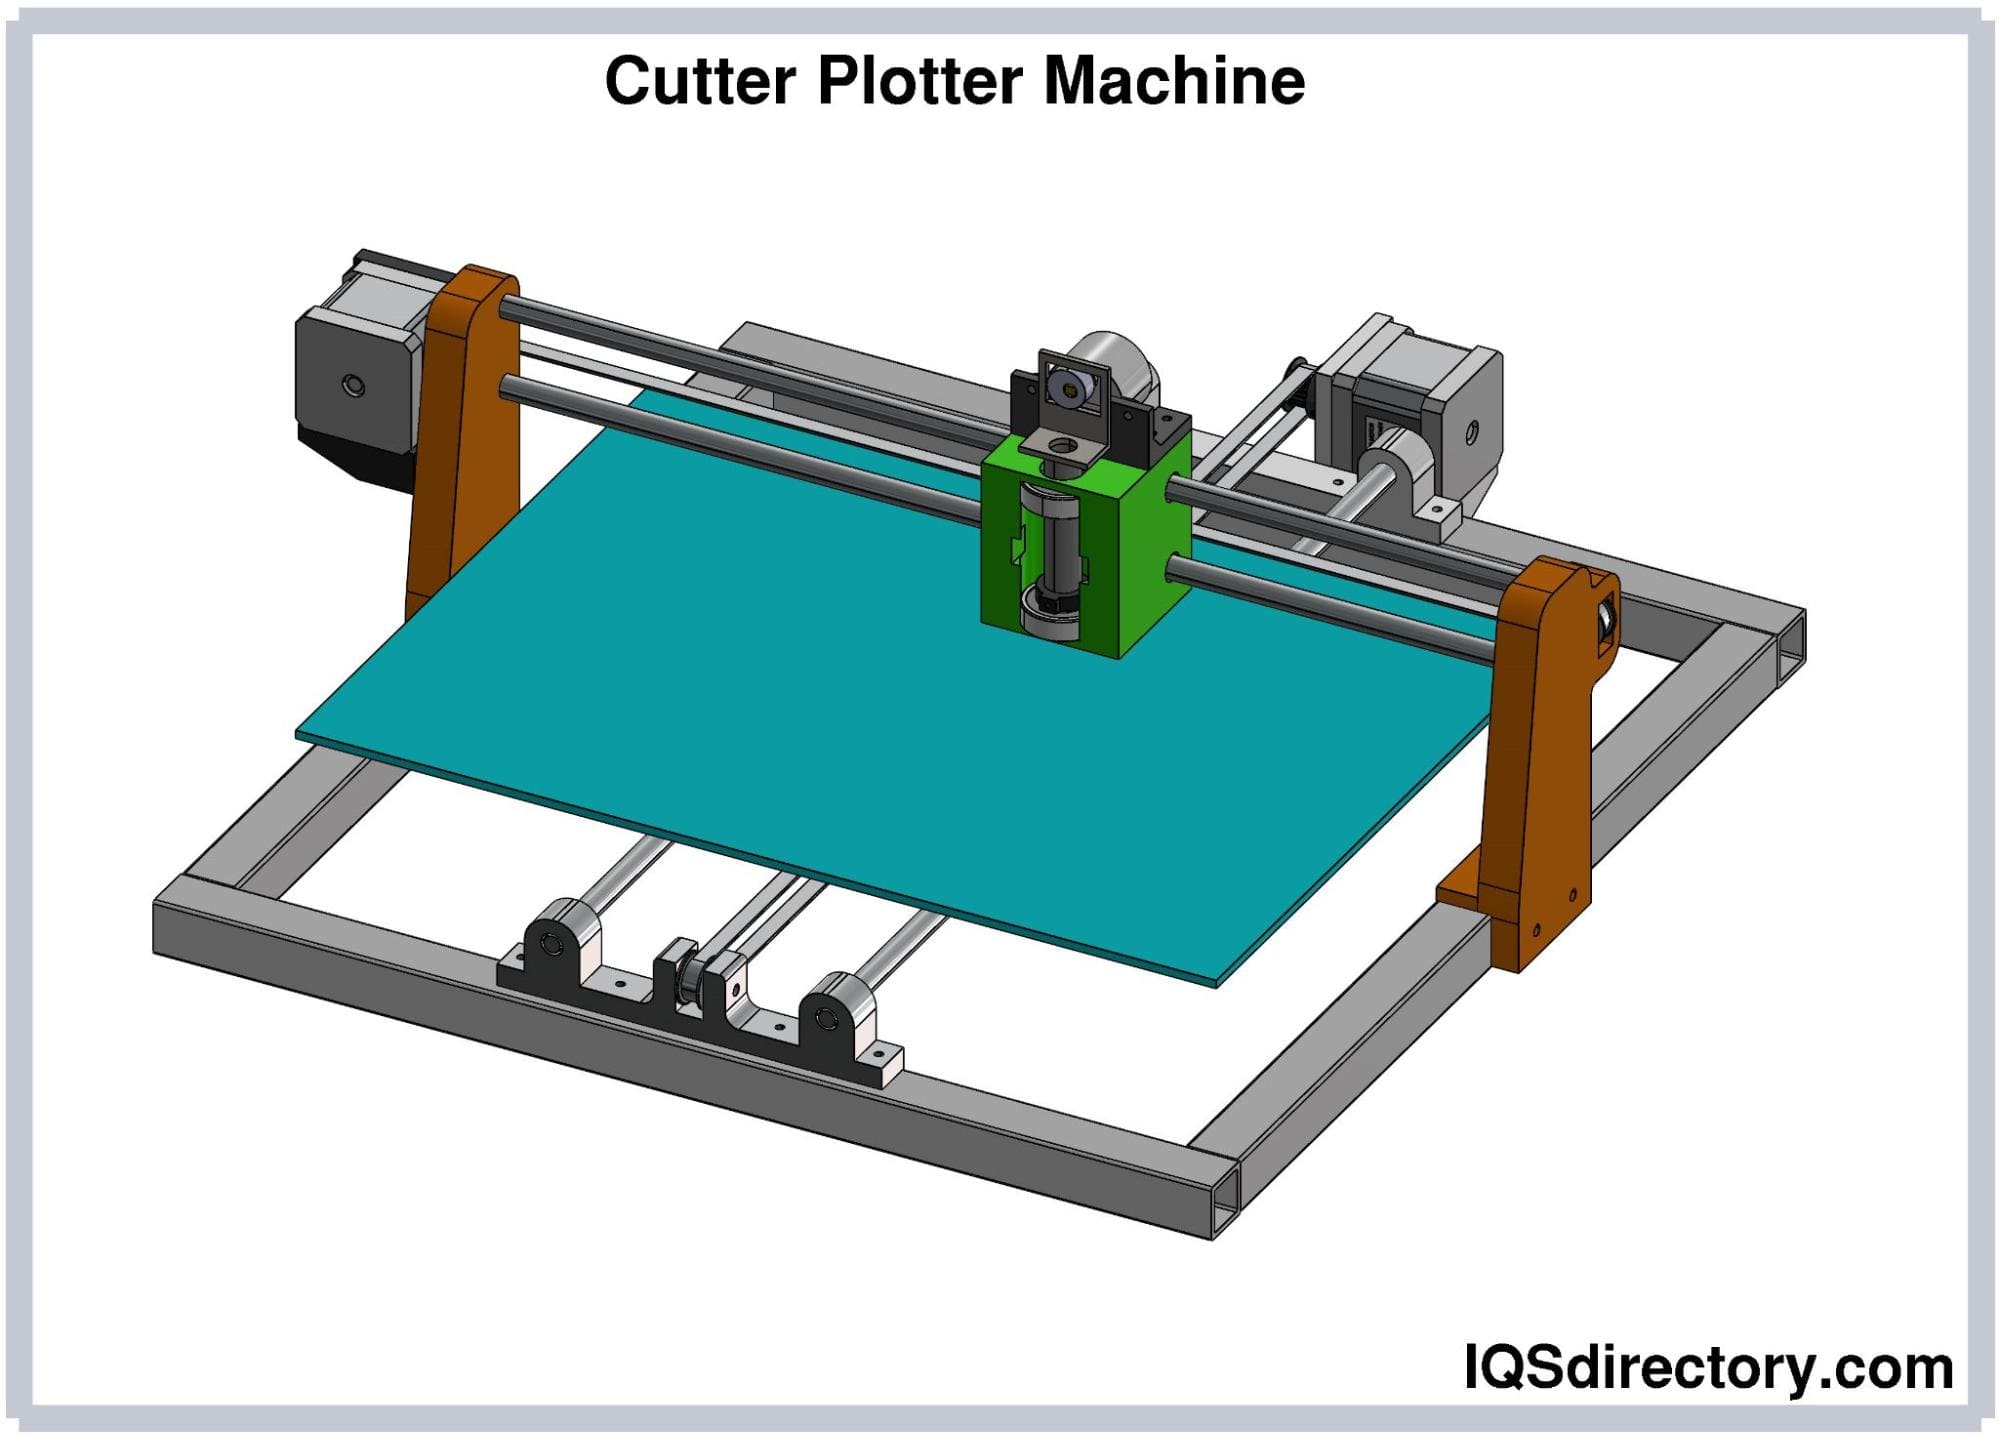 Cutter Plotter Machine